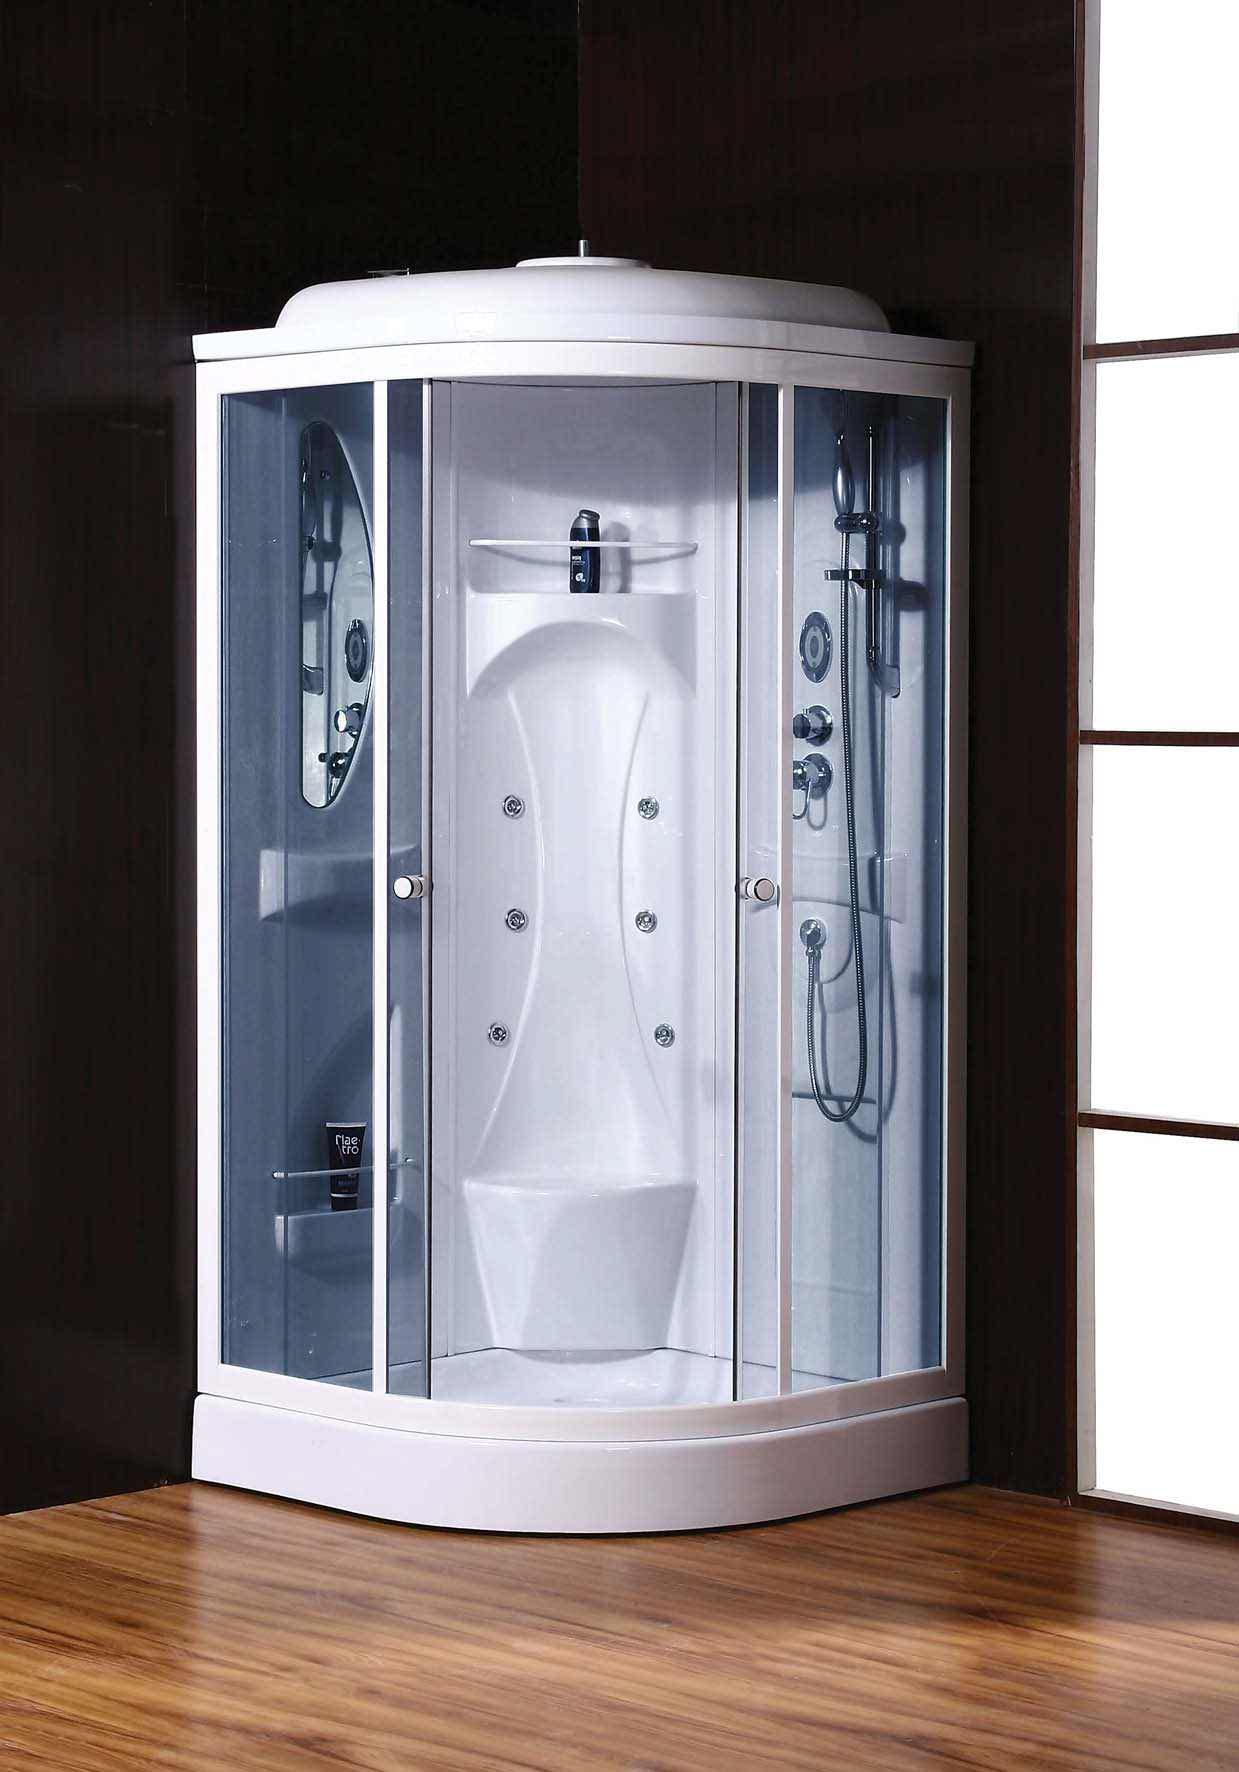 Shower Room sized 100*100*220cm